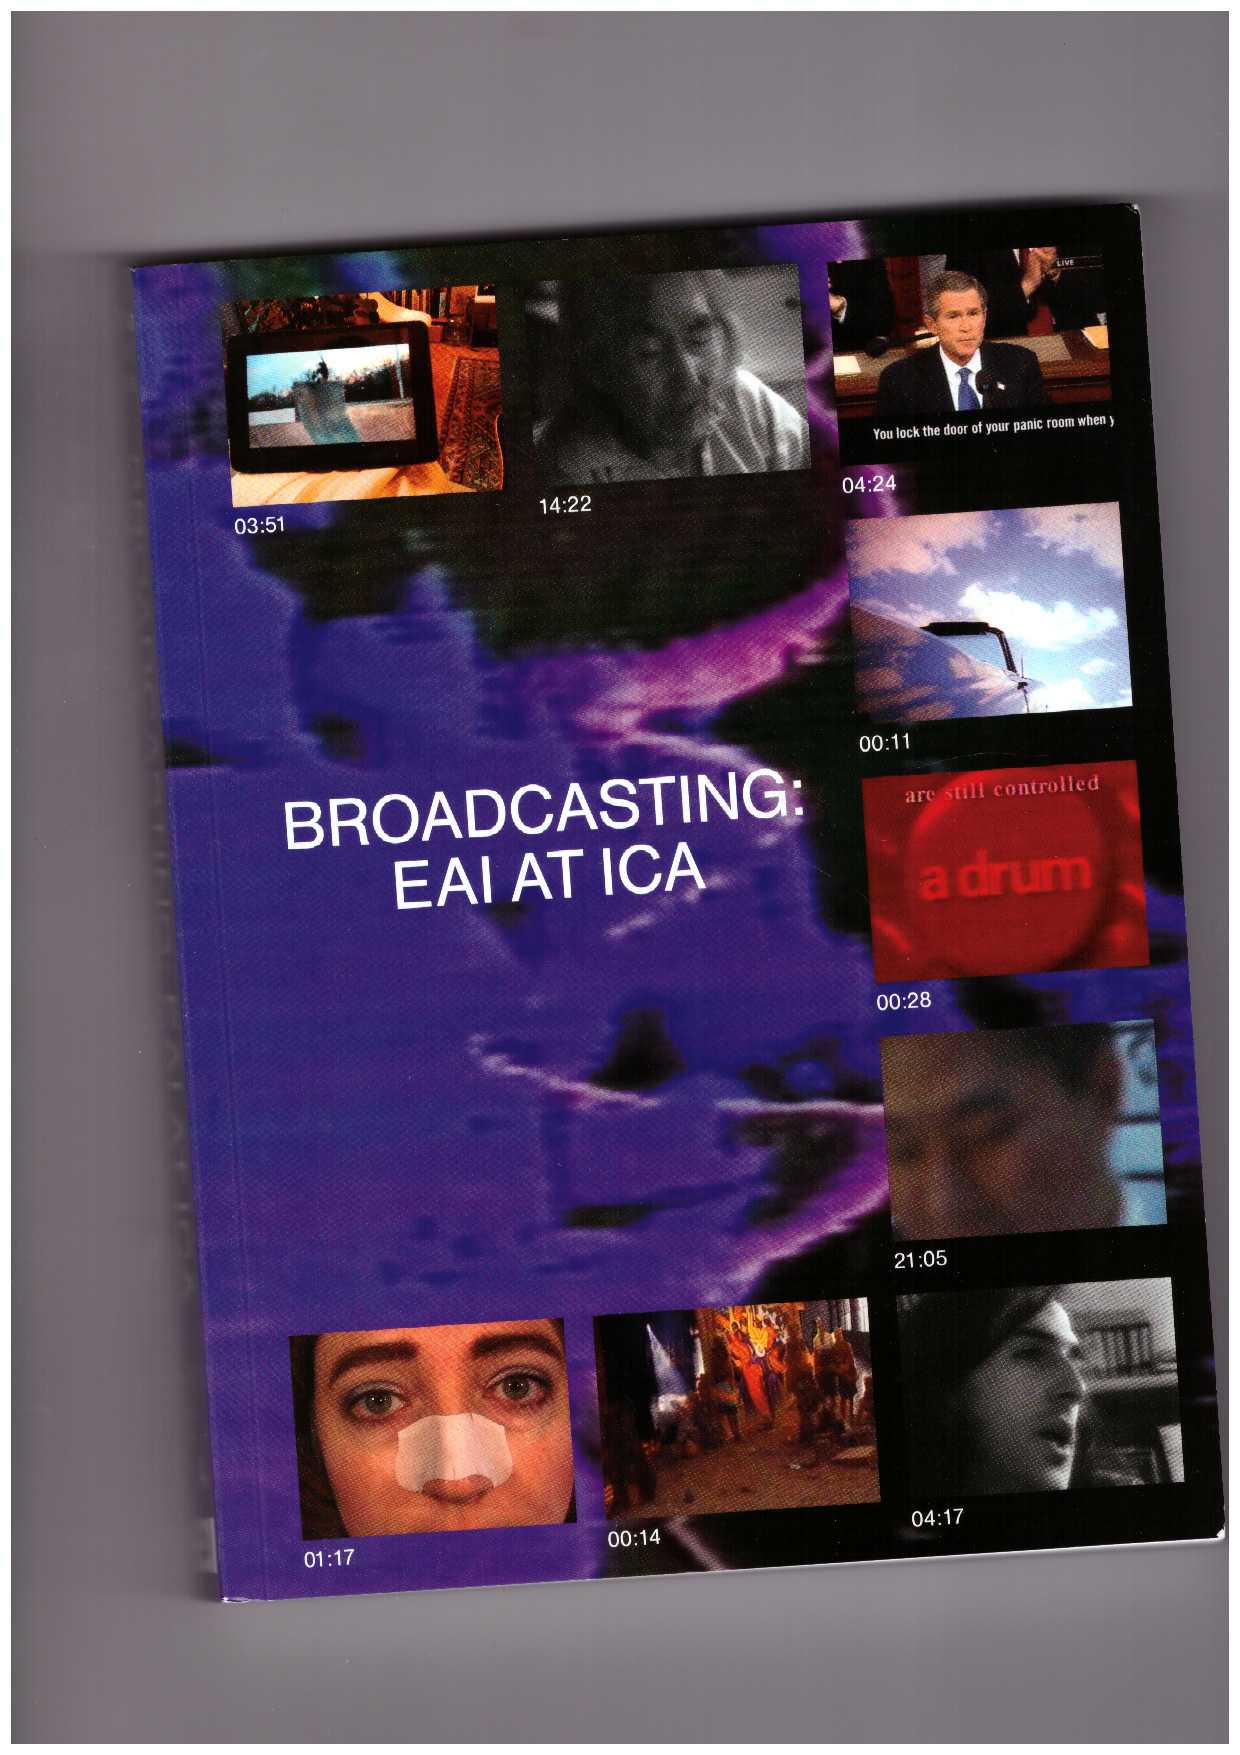 Various - Broadcasting: EAI at ICA